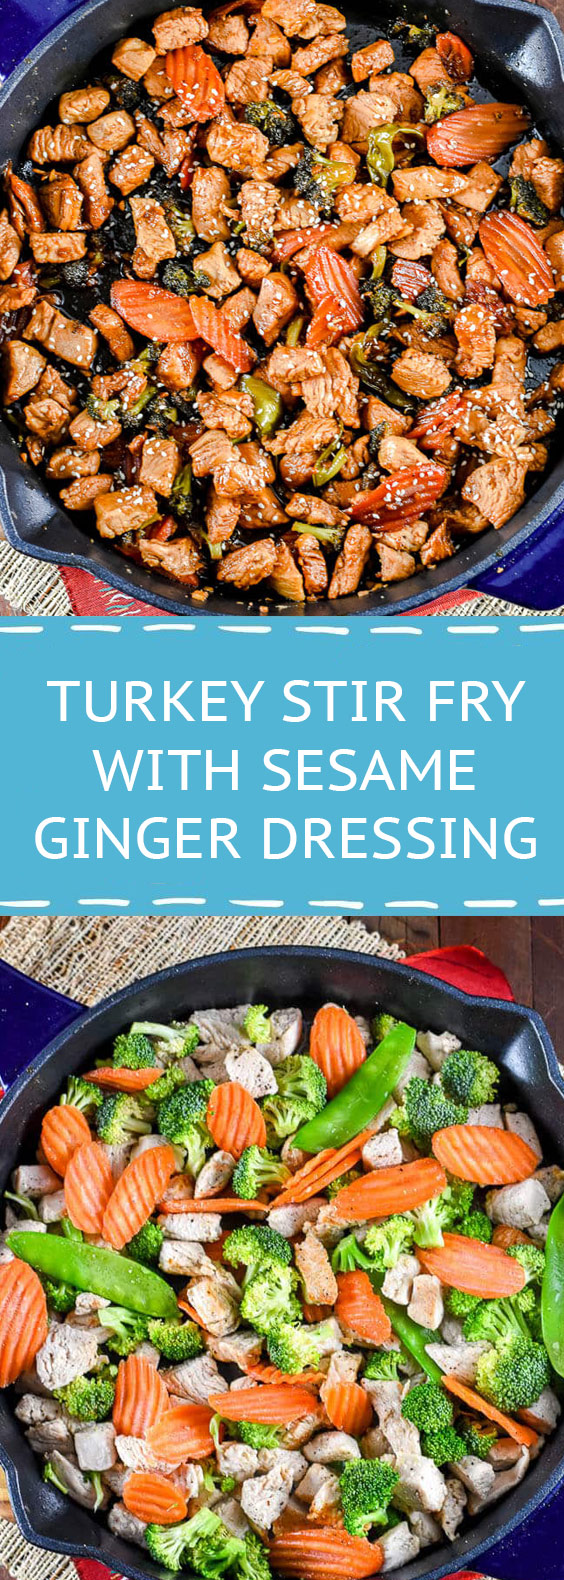 Turkey Stir Fry with Sesame Ginger Dressing